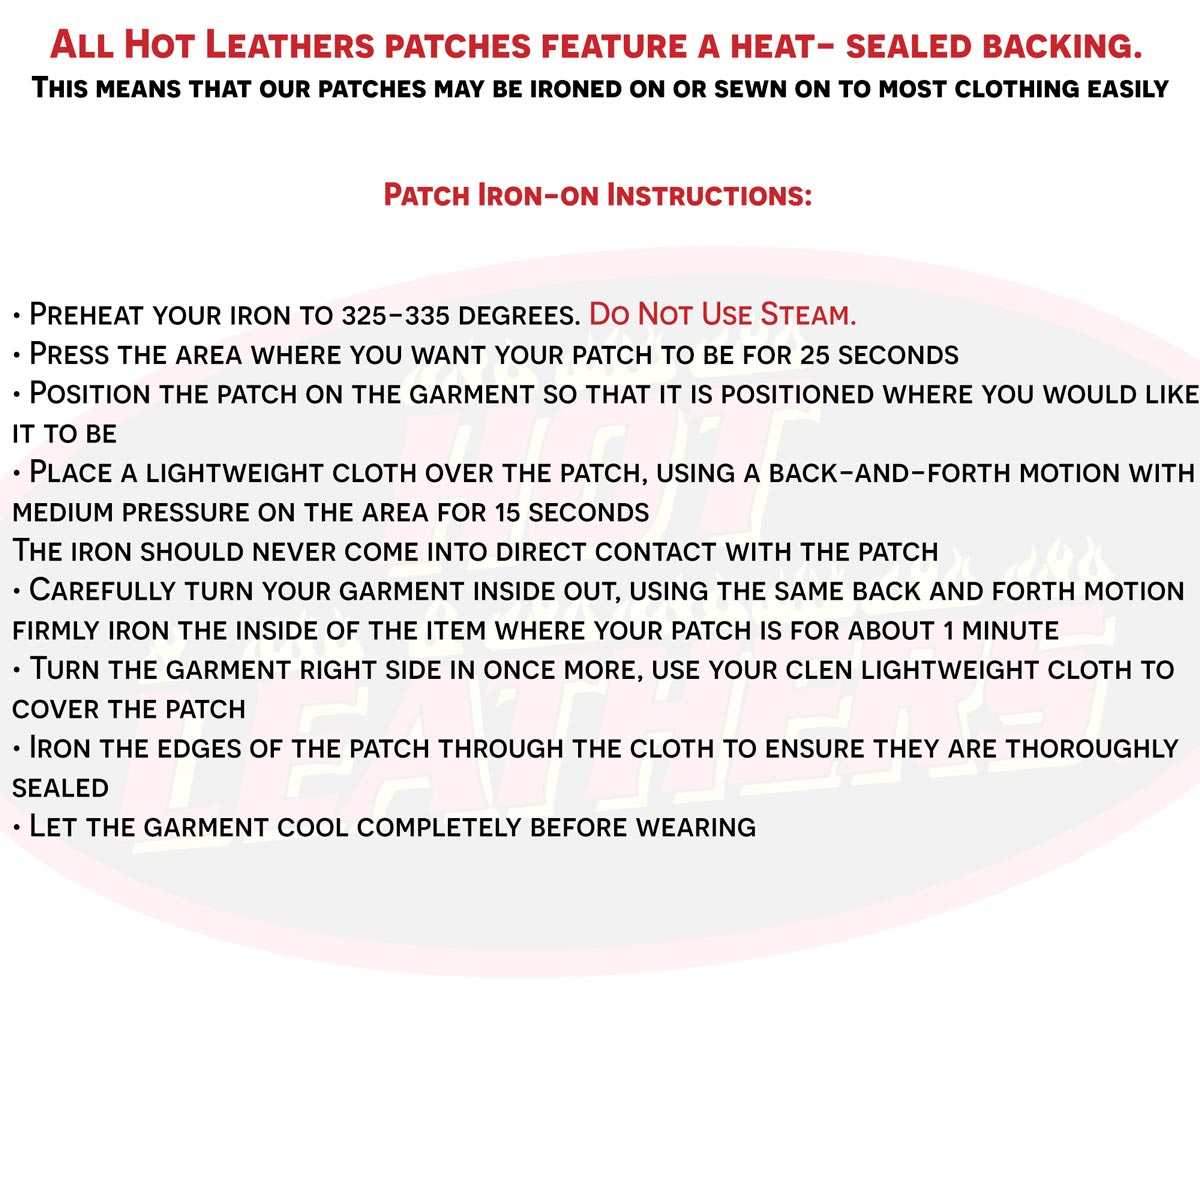 Hot Leathers Patch Nipple Freak PPL9109